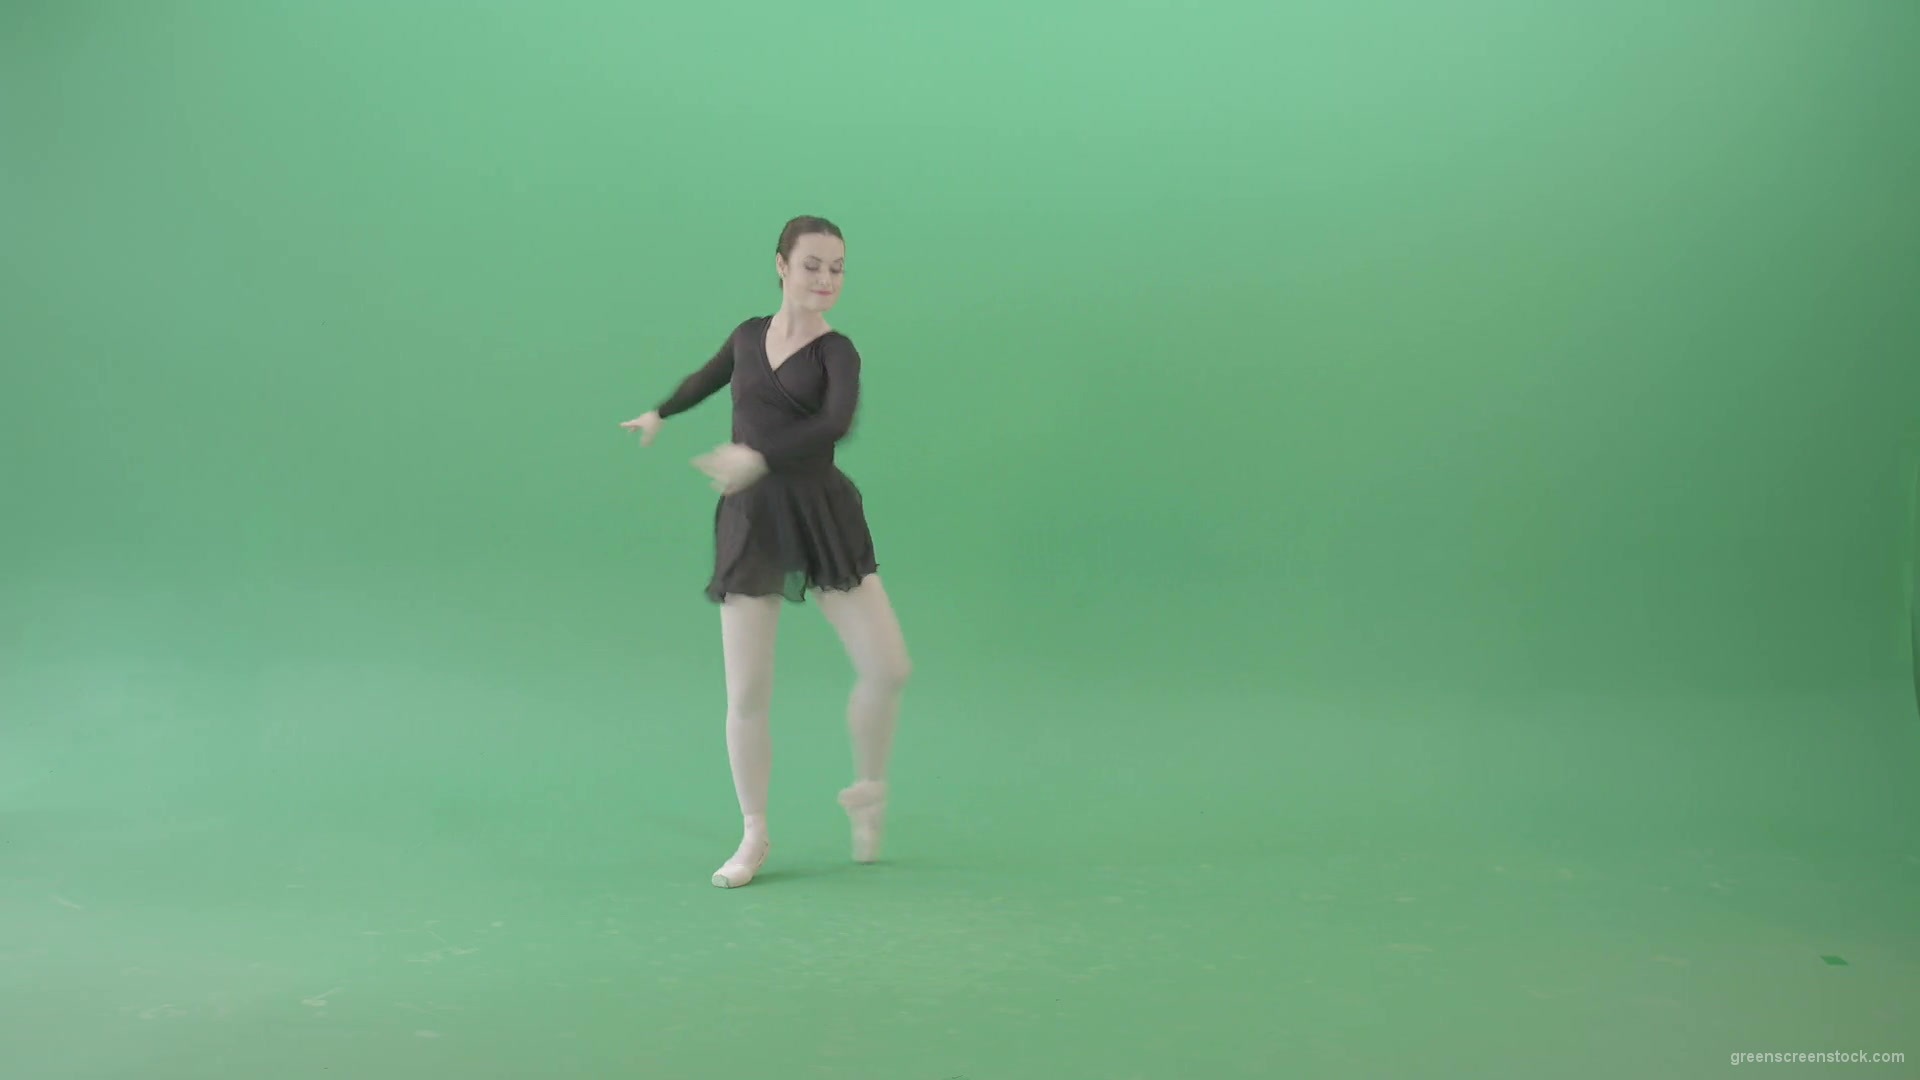 Russian-ballet-dancing-girl-in-black-body-wear-dress-dancing-isolated-on-green-screen-4K-Video-Footage-1920_004 Green Screen Stock